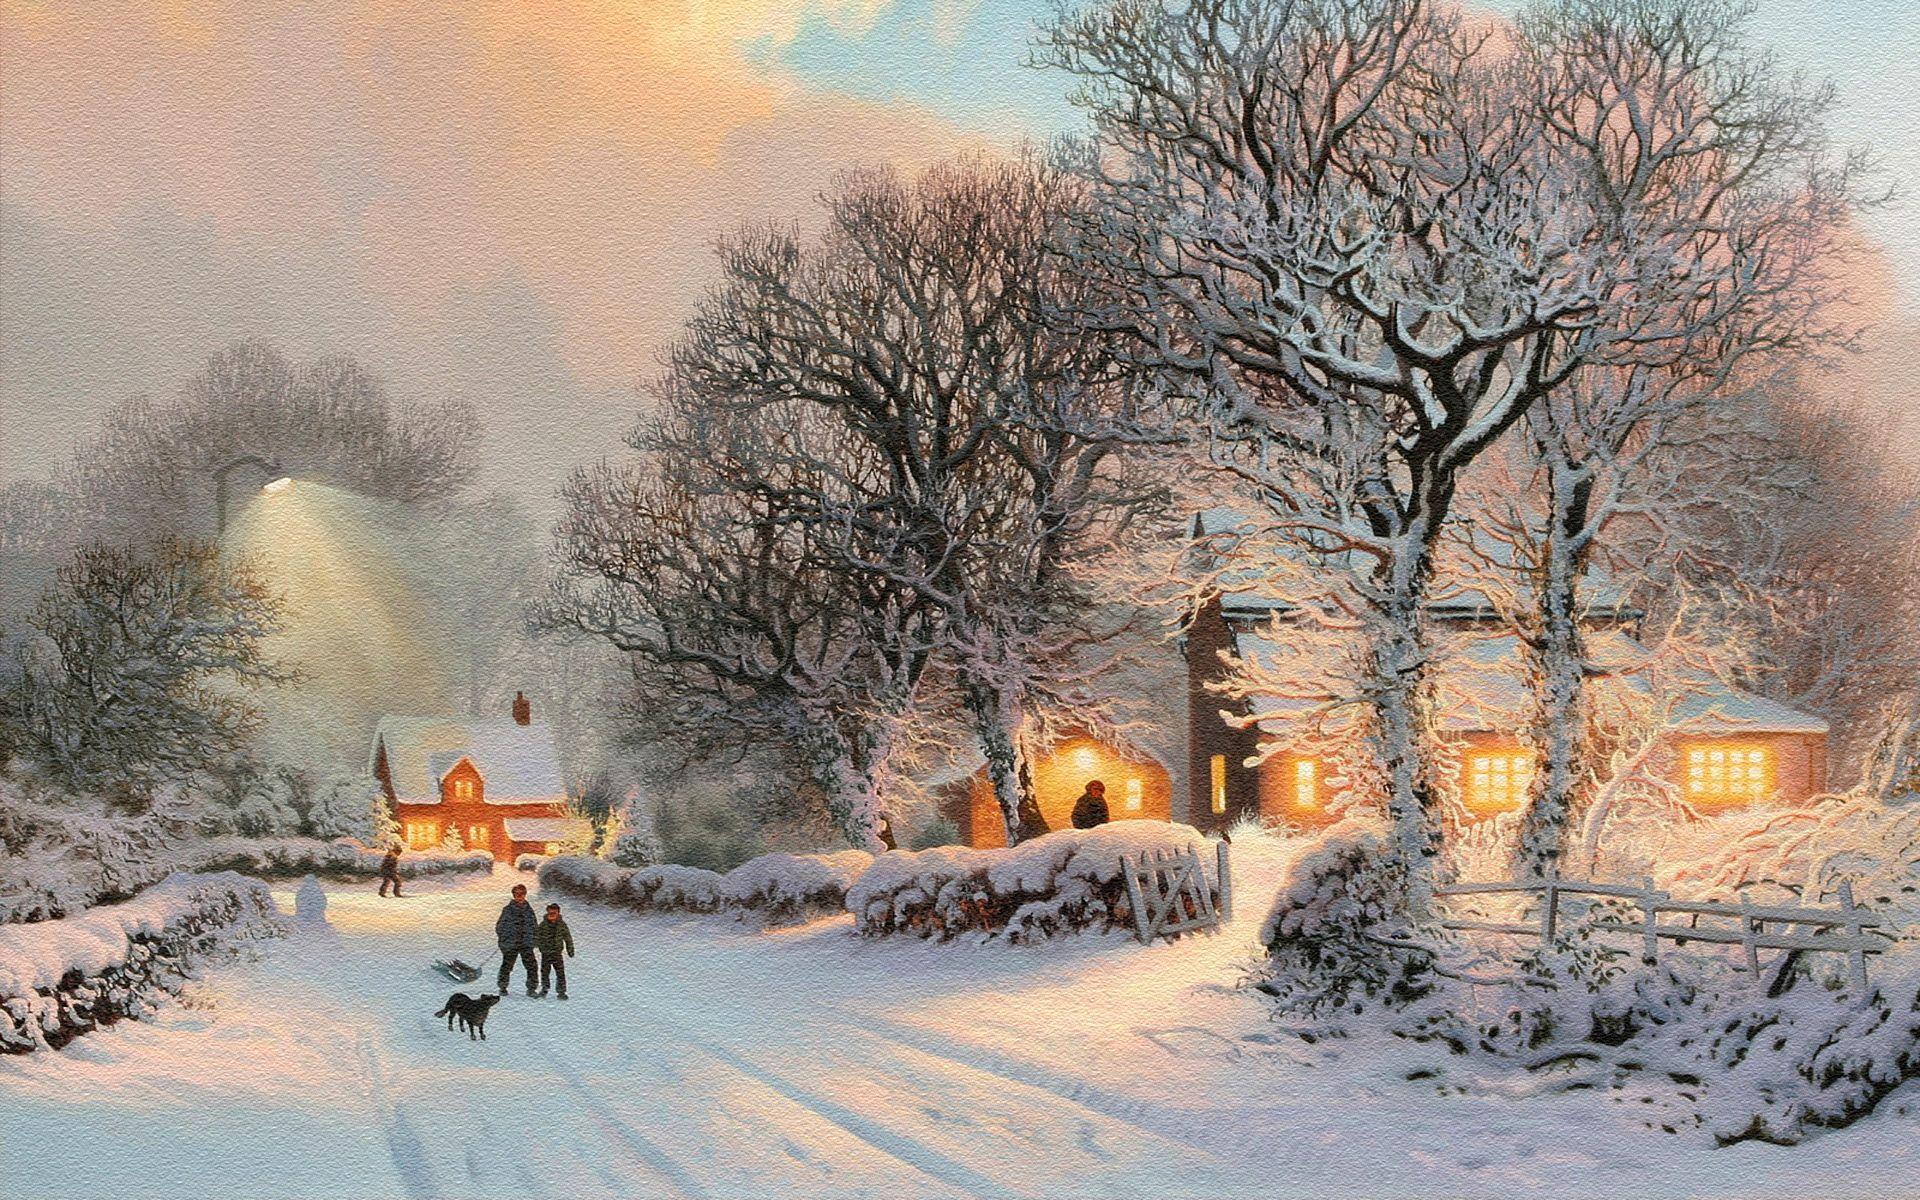 Winter Village Drawn Wallpaper, iPhone Wallpaper, Facebook Cover